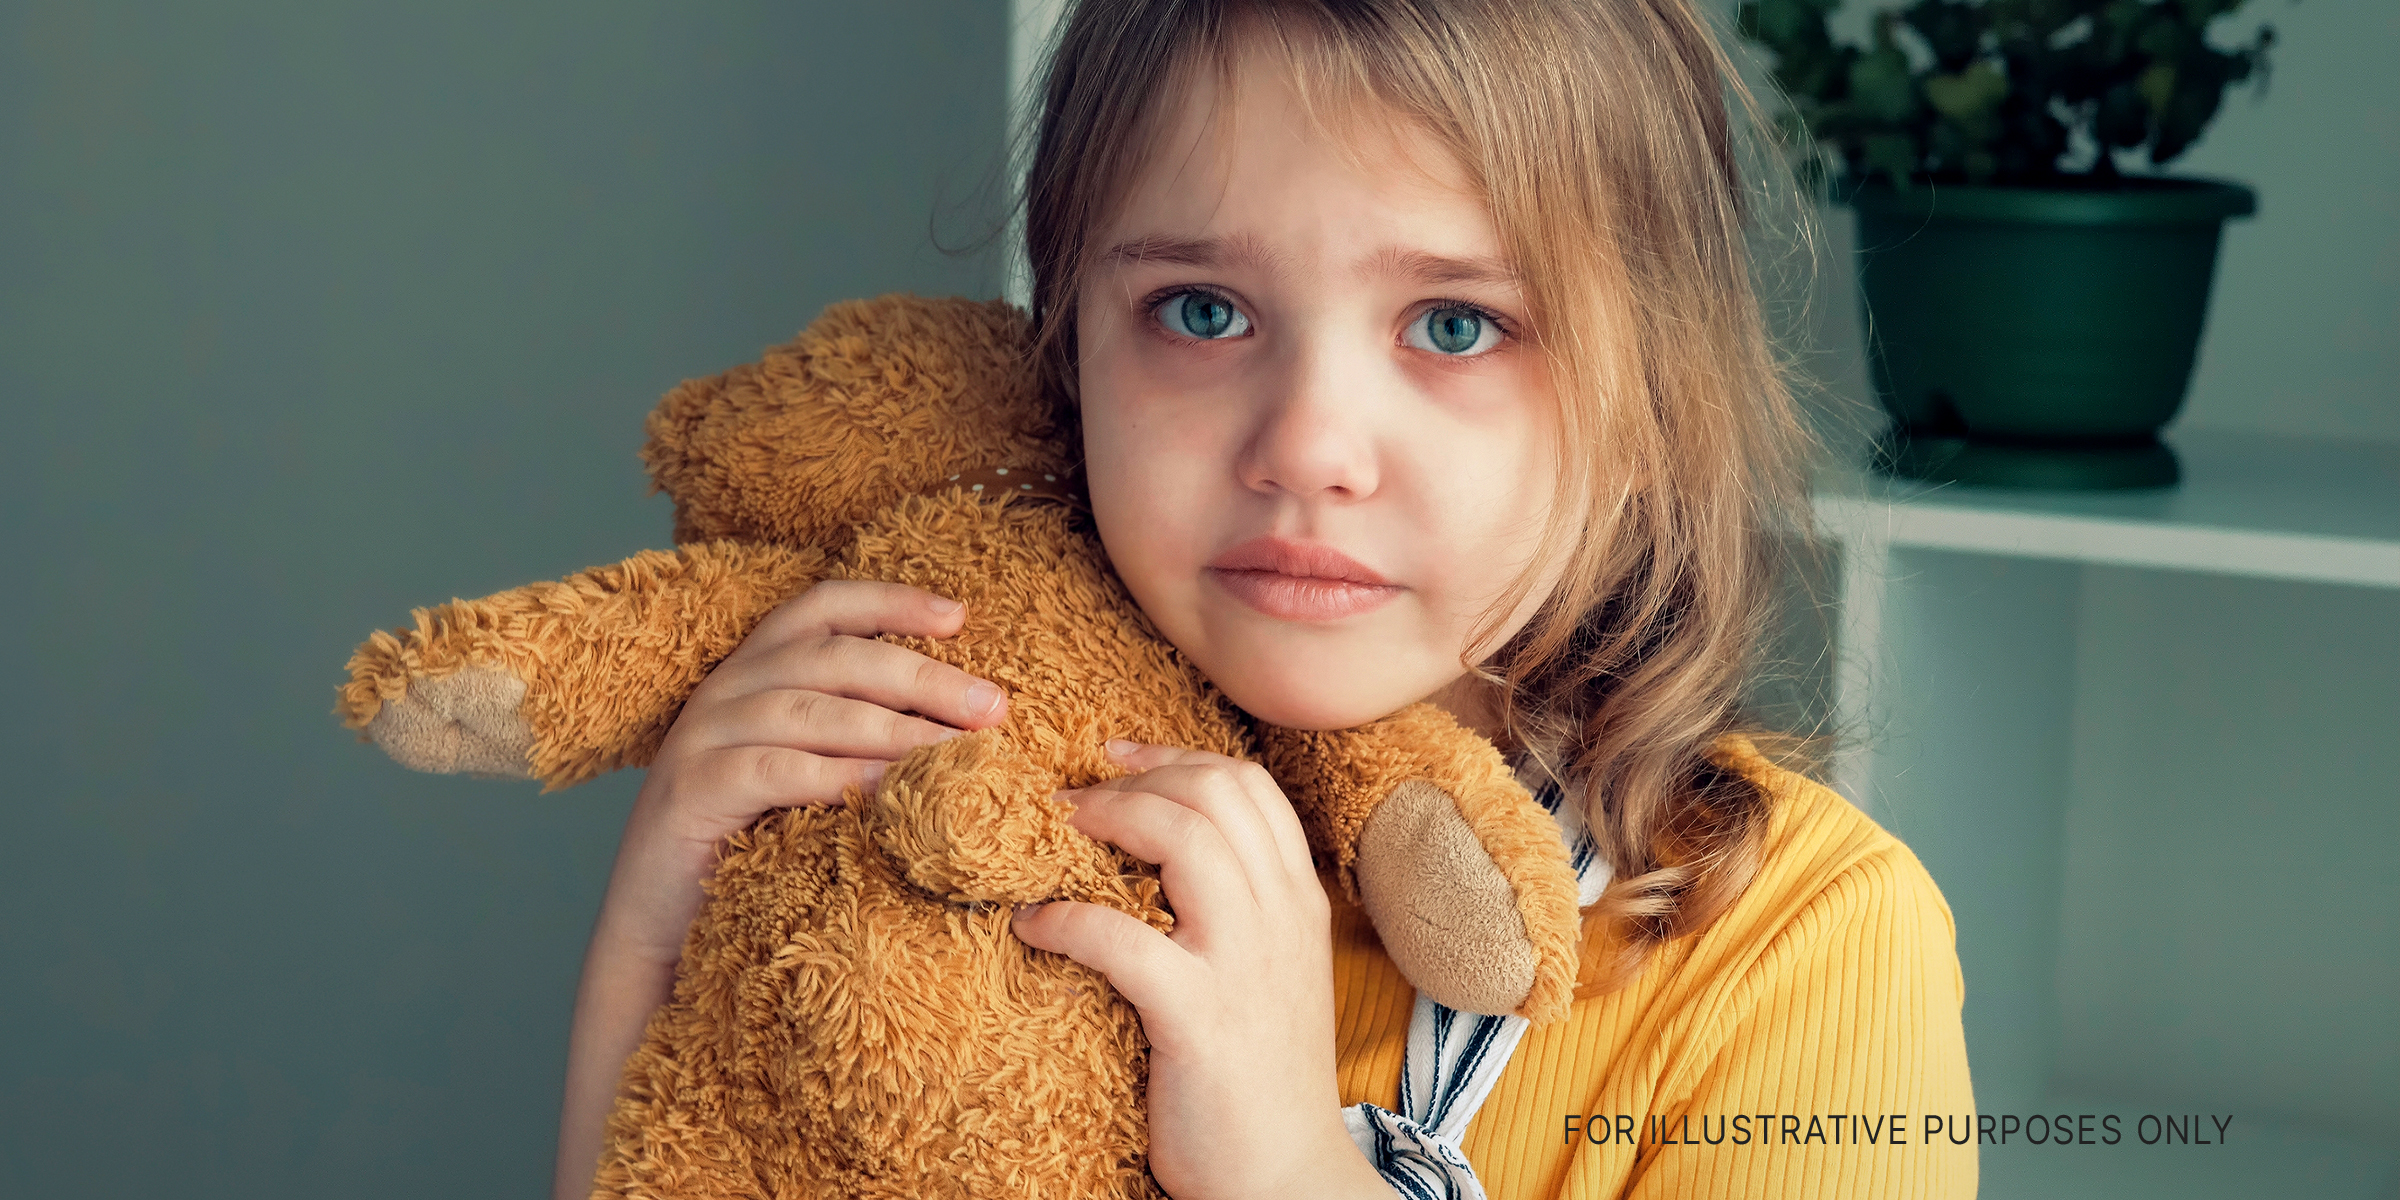 A small girl holding a teddy bear | Source: Shutterstock